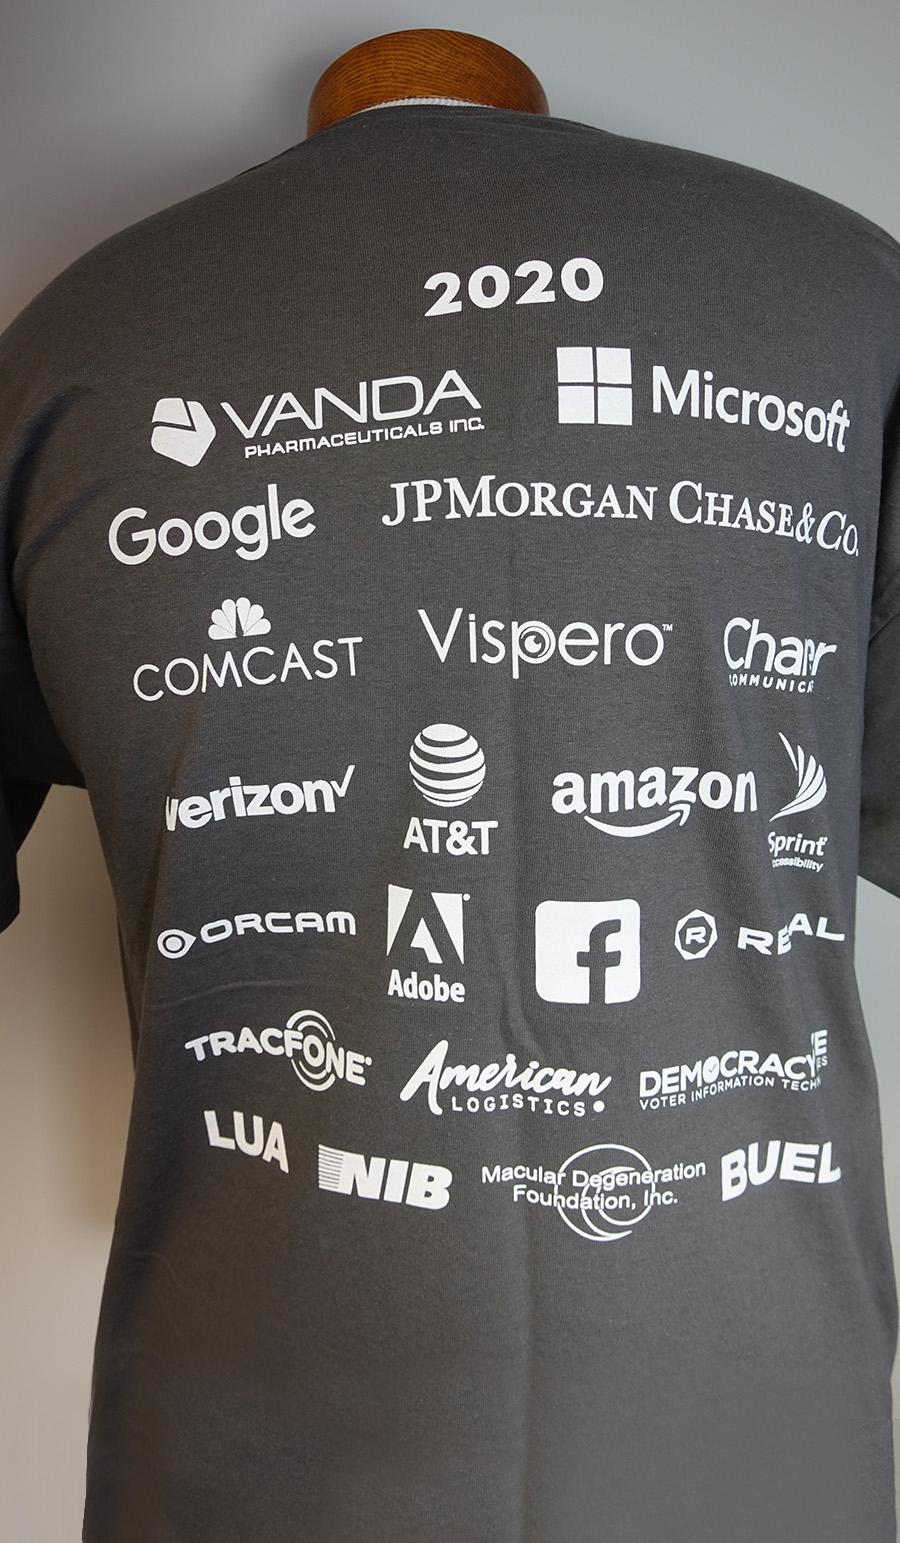 T-Shirt back side with sponsor logos